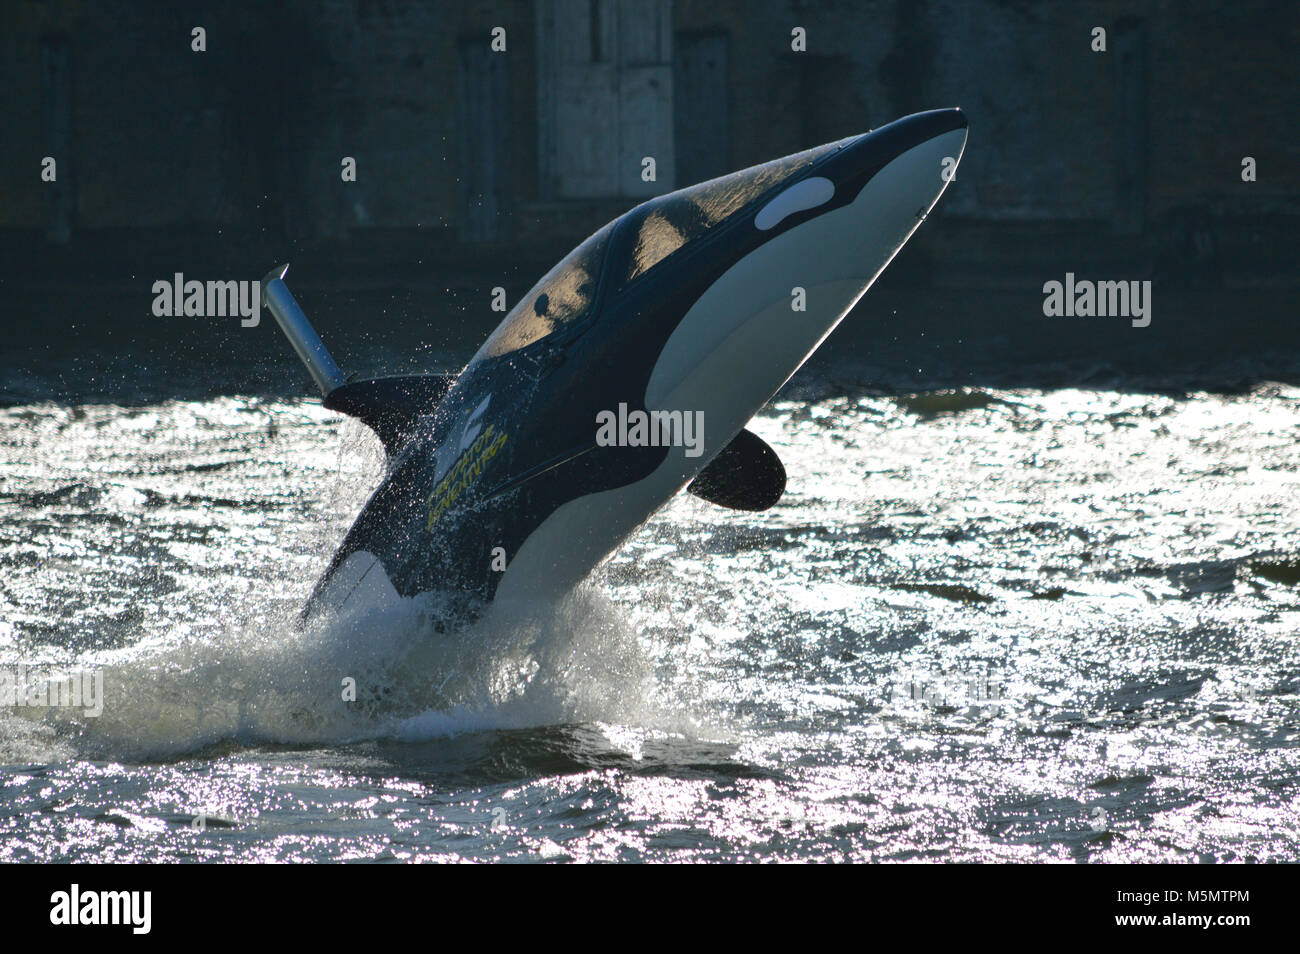 Predator Adventures offering thrill-rides in their Seabreacher Watercraft Killer Whale submersible speedboat in Royal Victoria Dock London Stock Photo